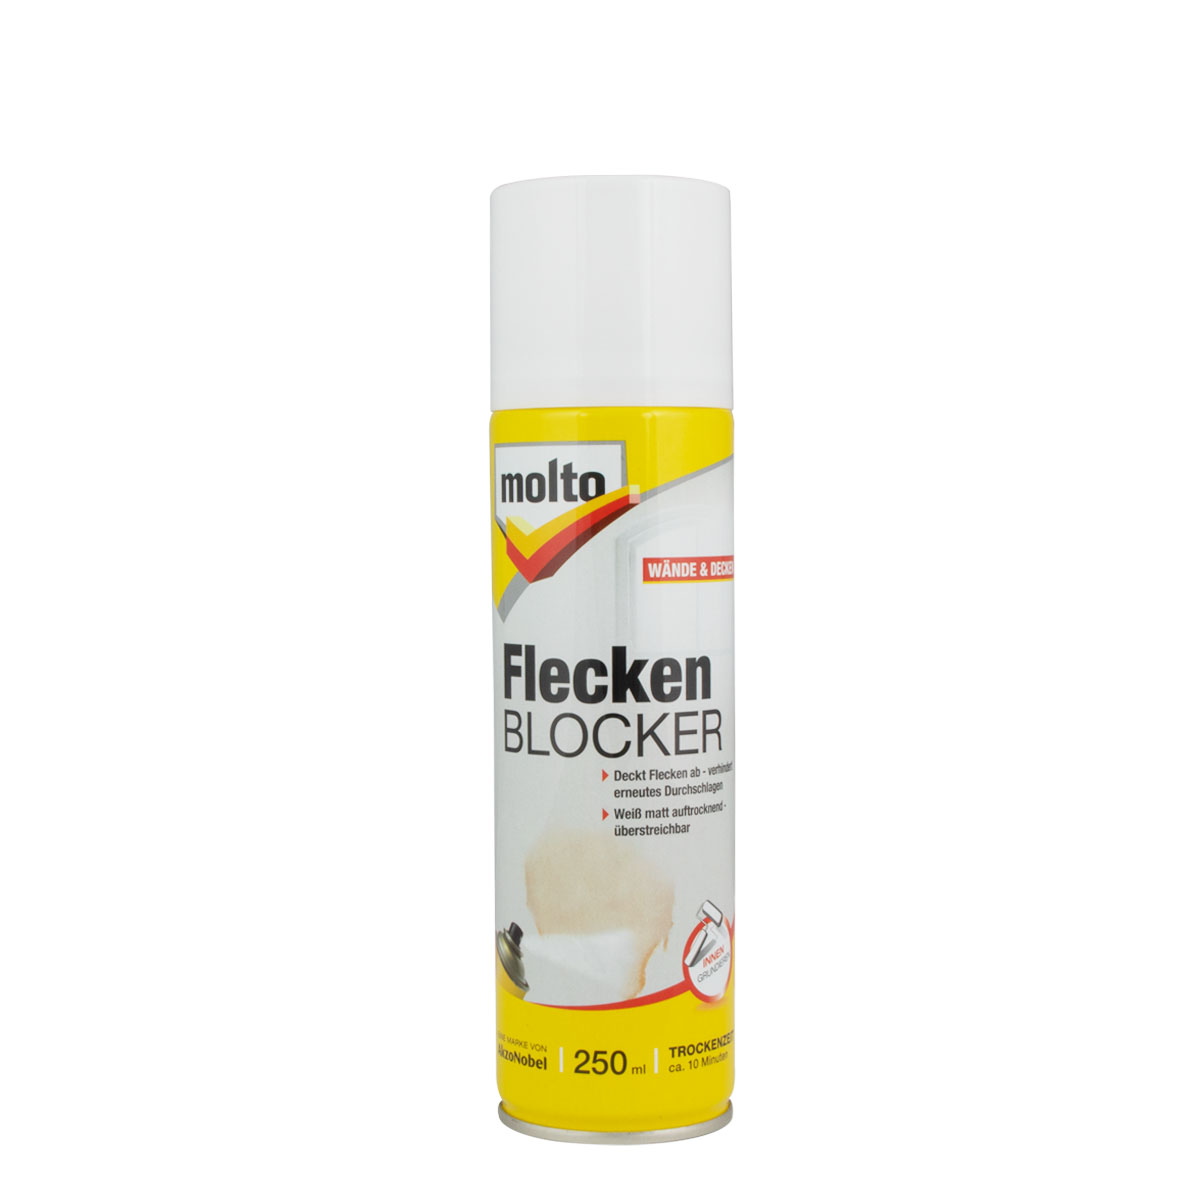 Molto_flecken-blocker_250ml_gross